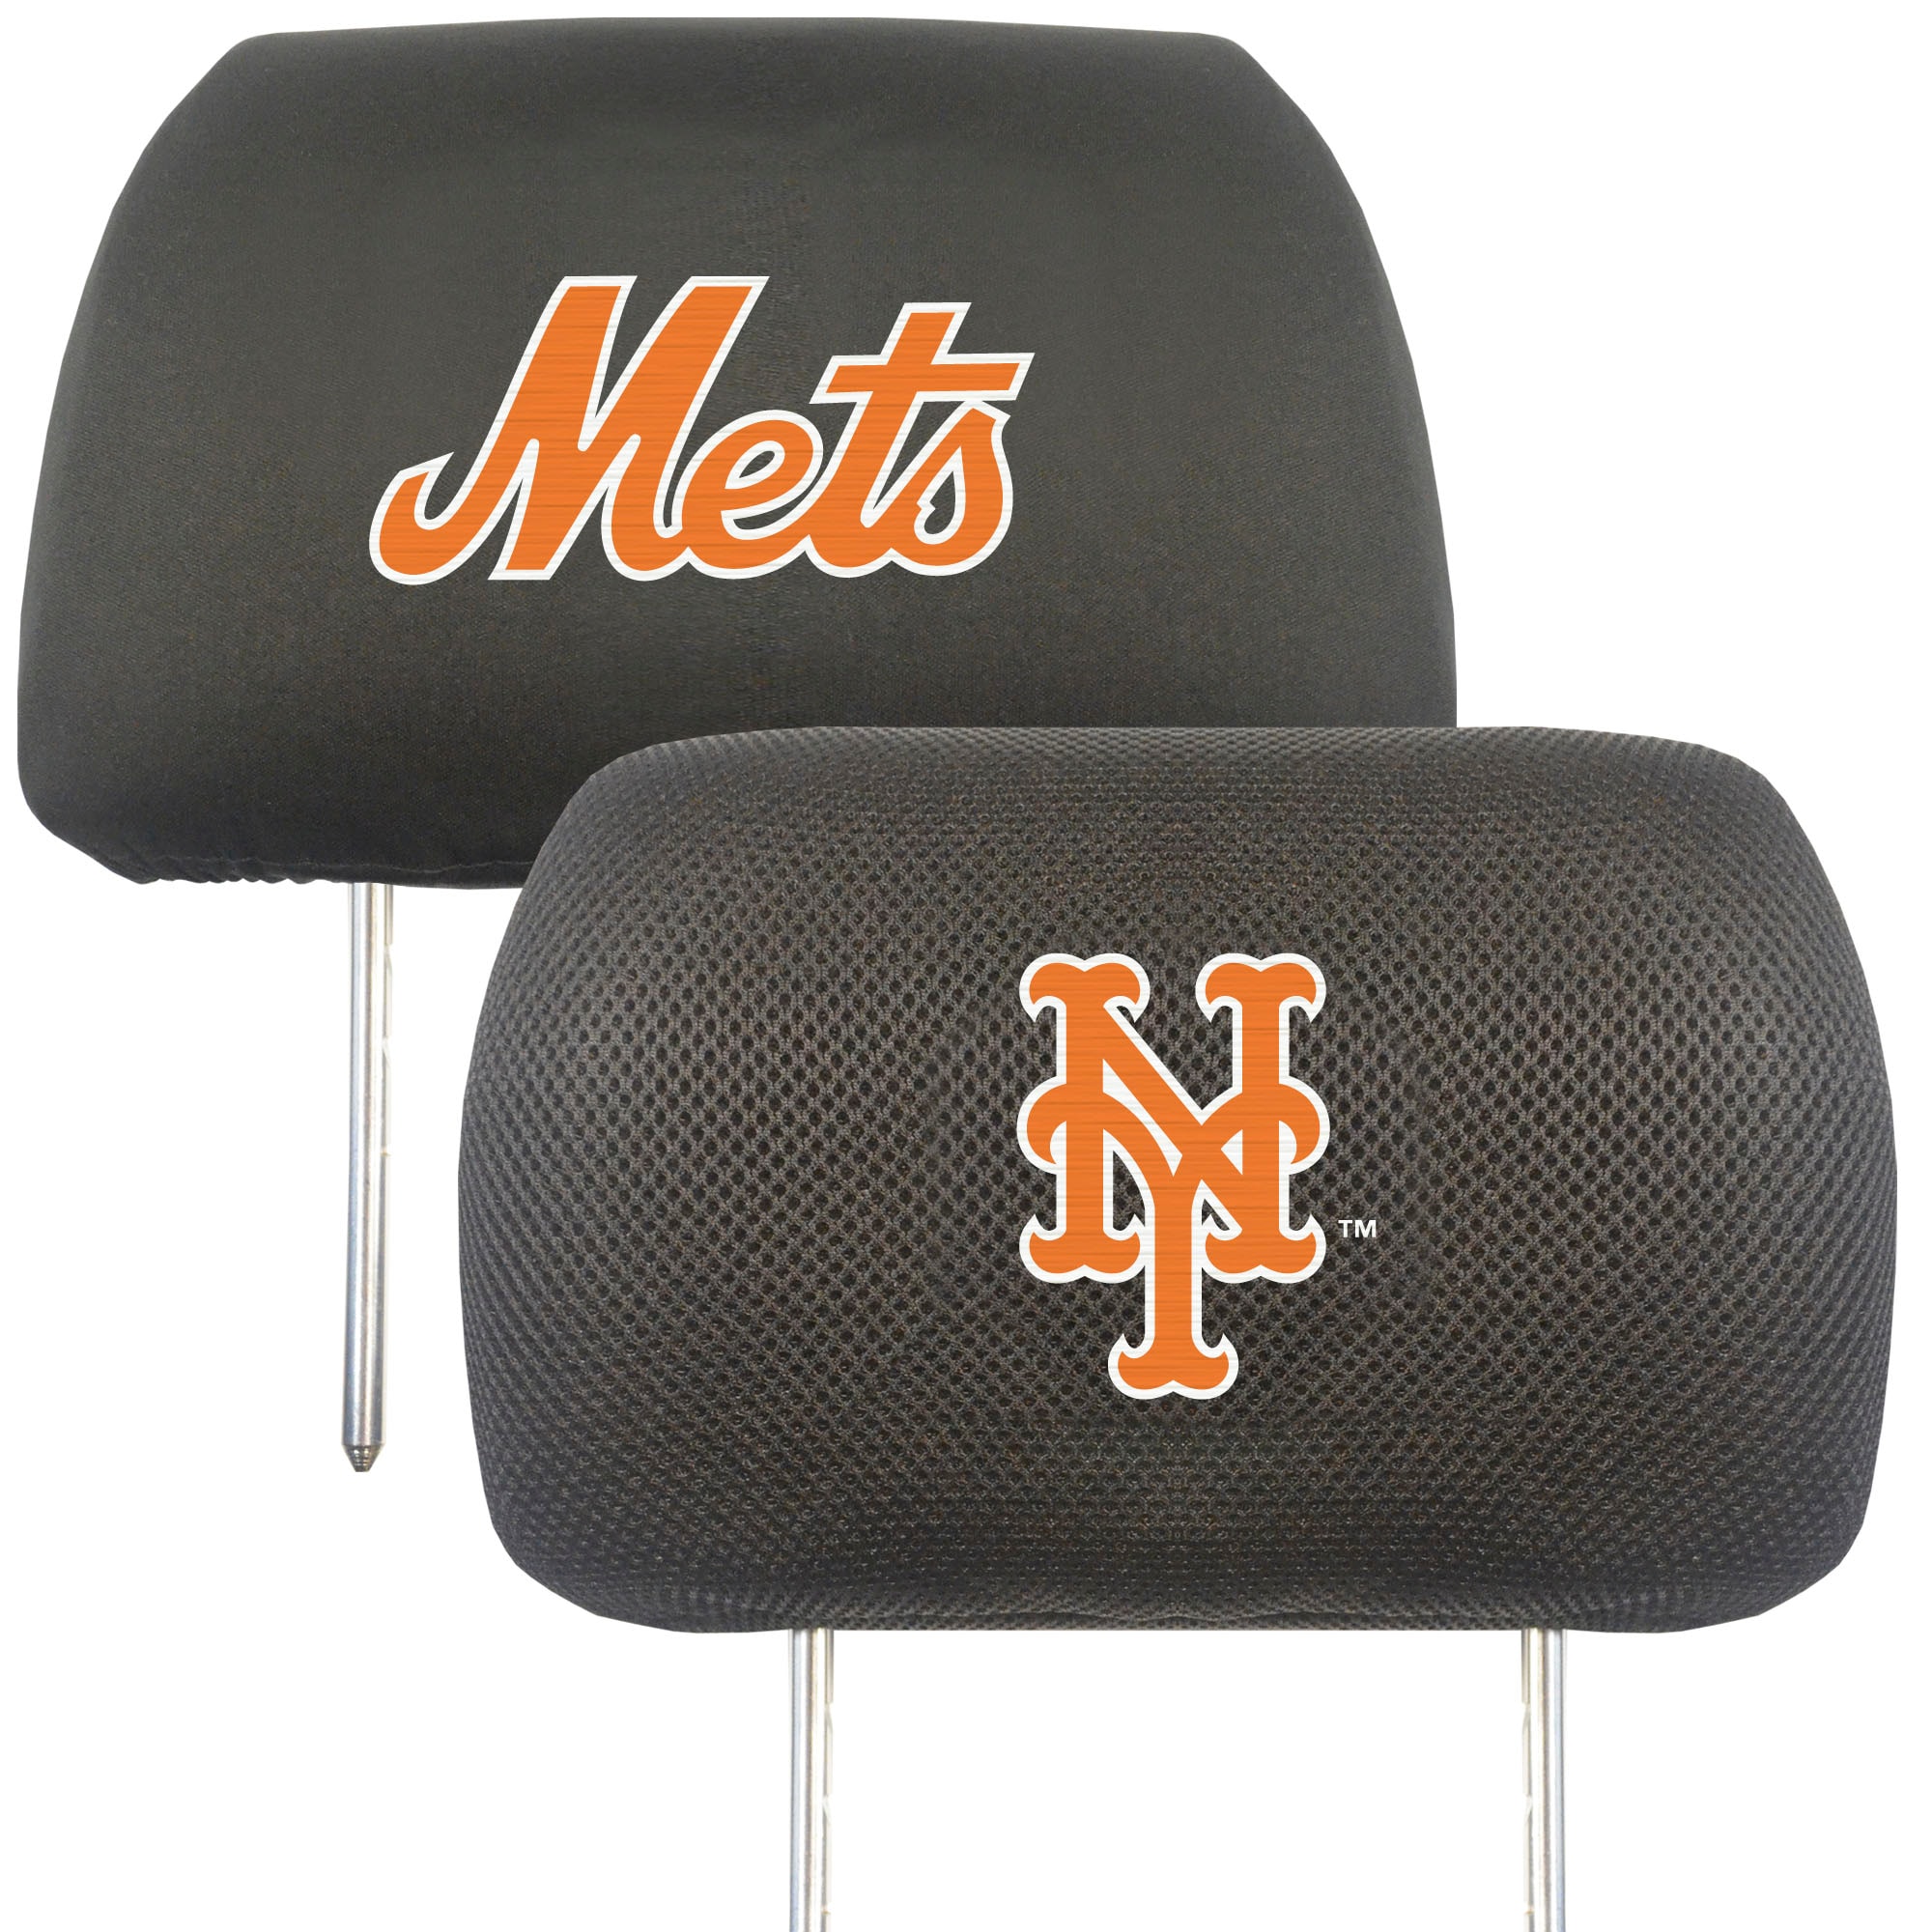 New York Mets Licensed Dog Sportswear